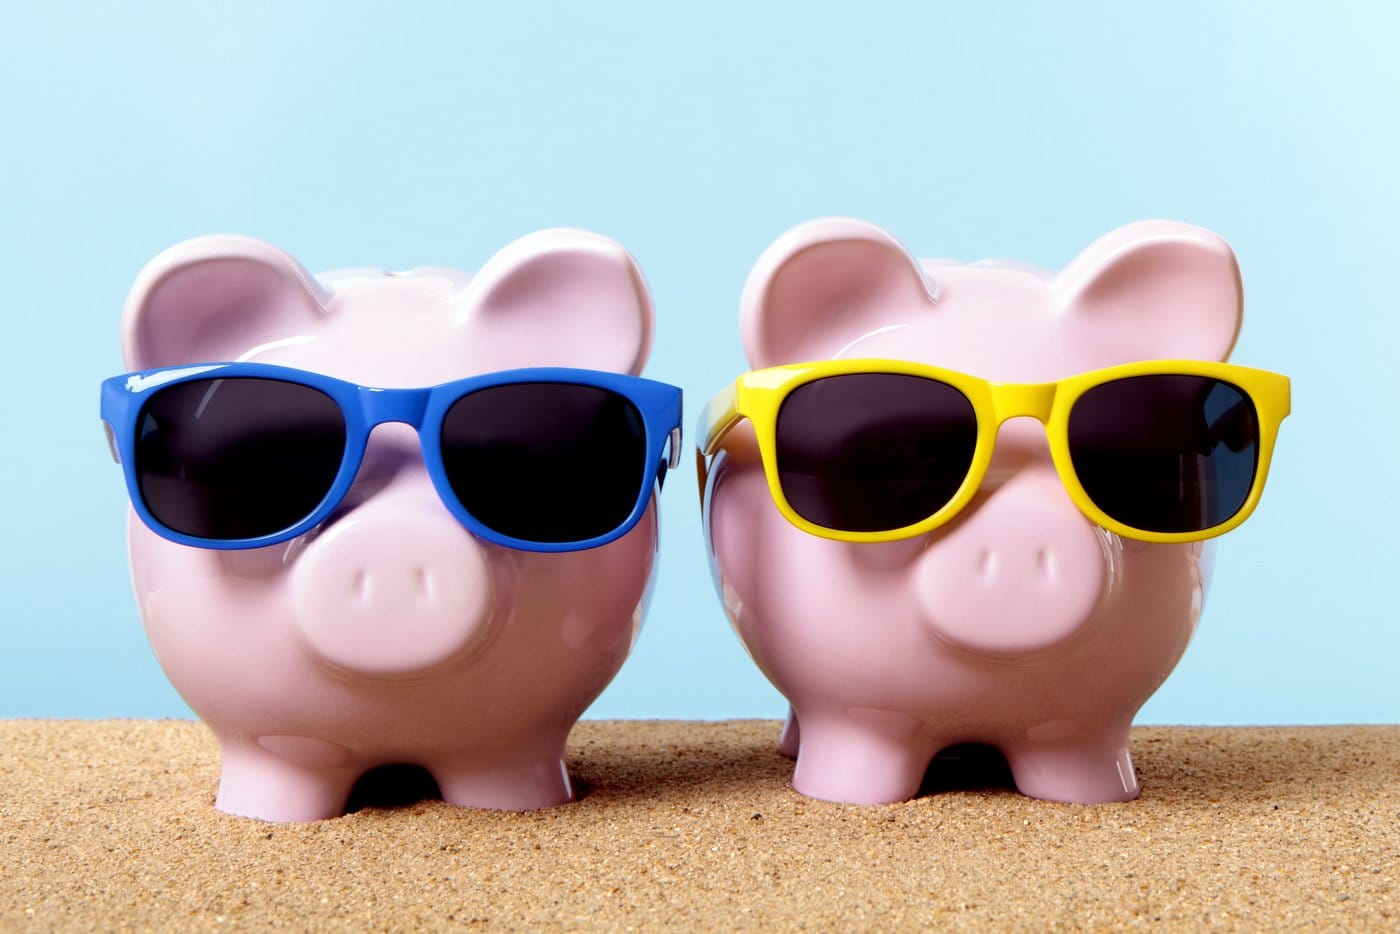 Piggy banks - Credit union and banks